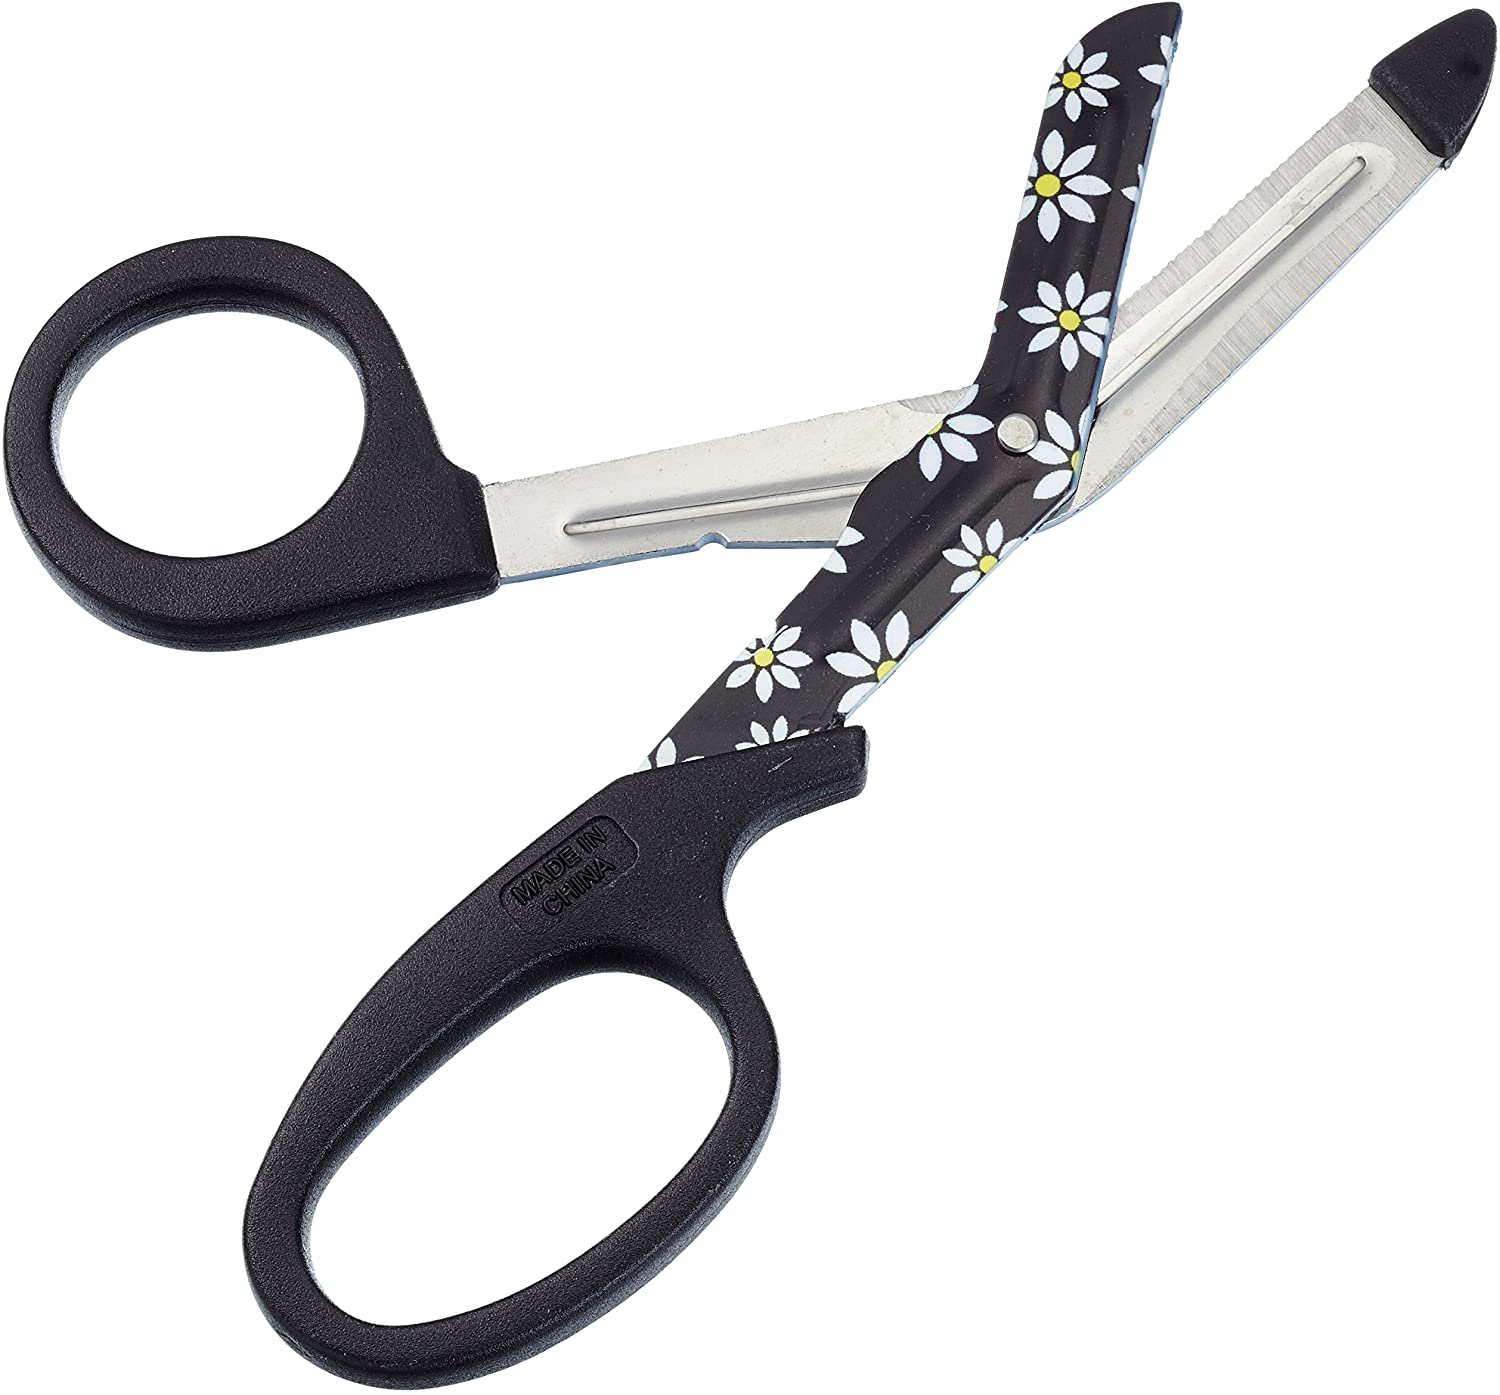 KaWe bandage scissors all-purpose large, black